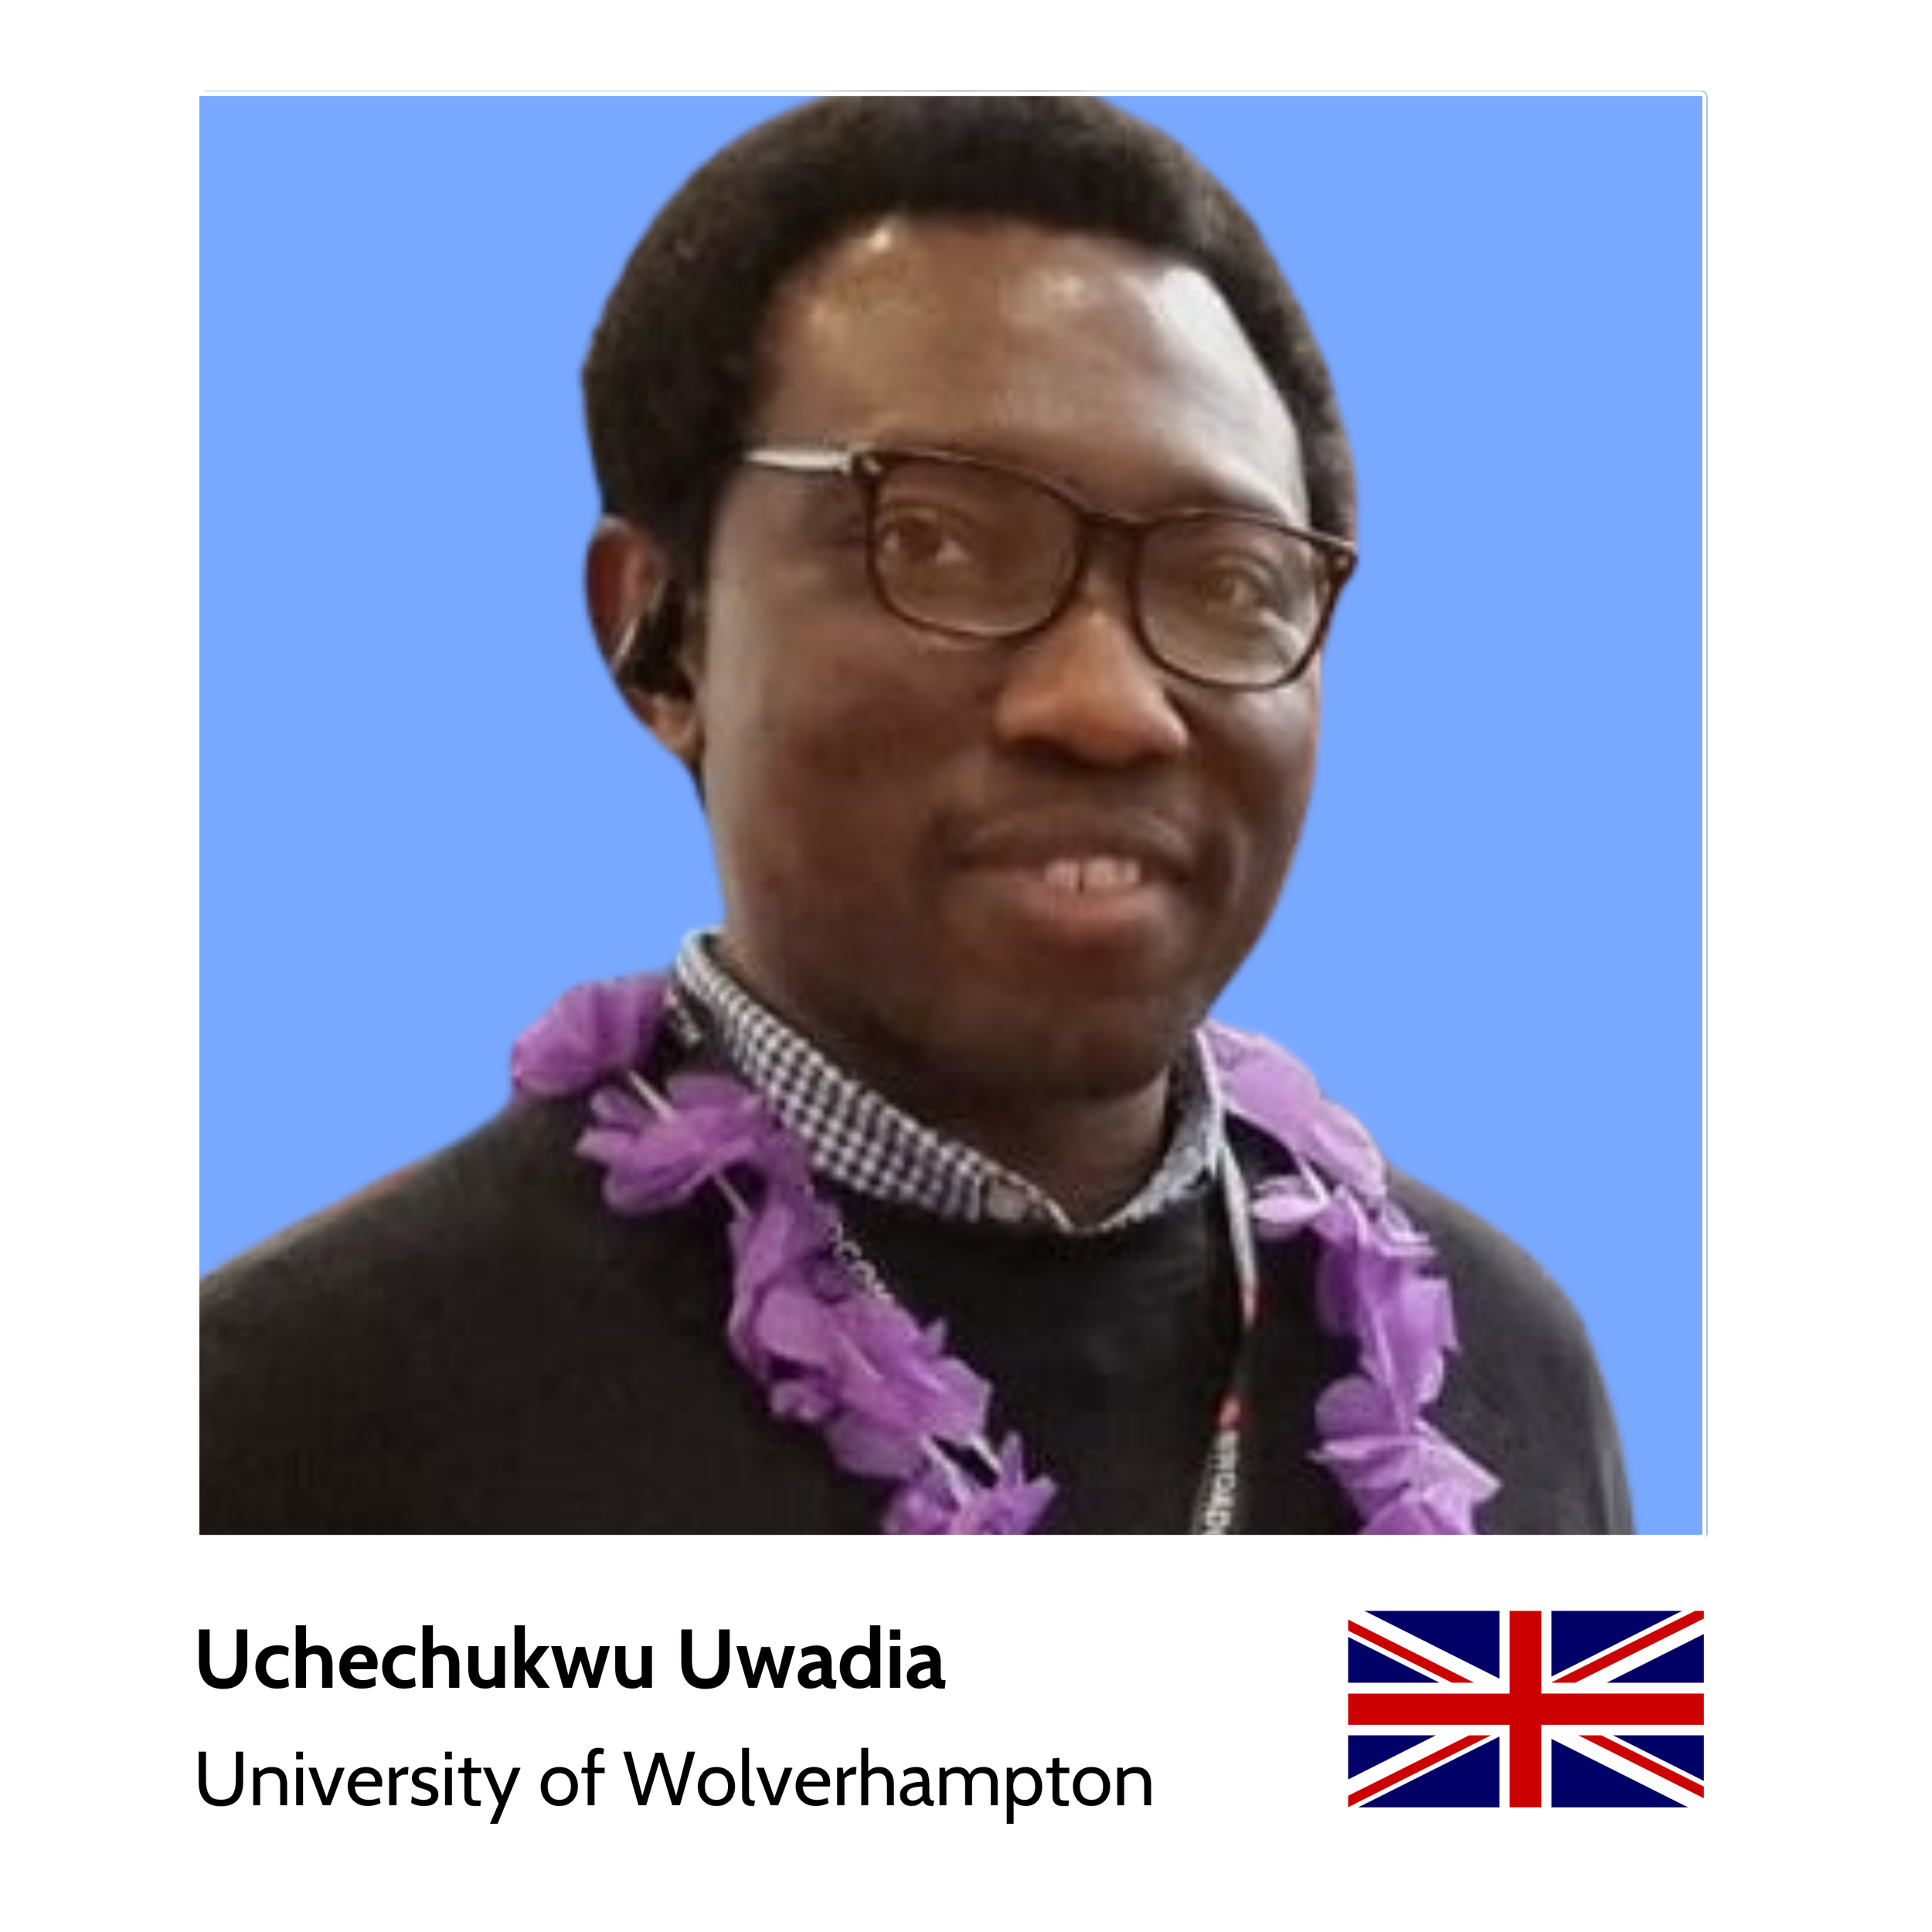 Your_Big_Year_ibm_z_student_ambassador_Uchechukwu_Uwadia_University_of_Wolverhampton.png